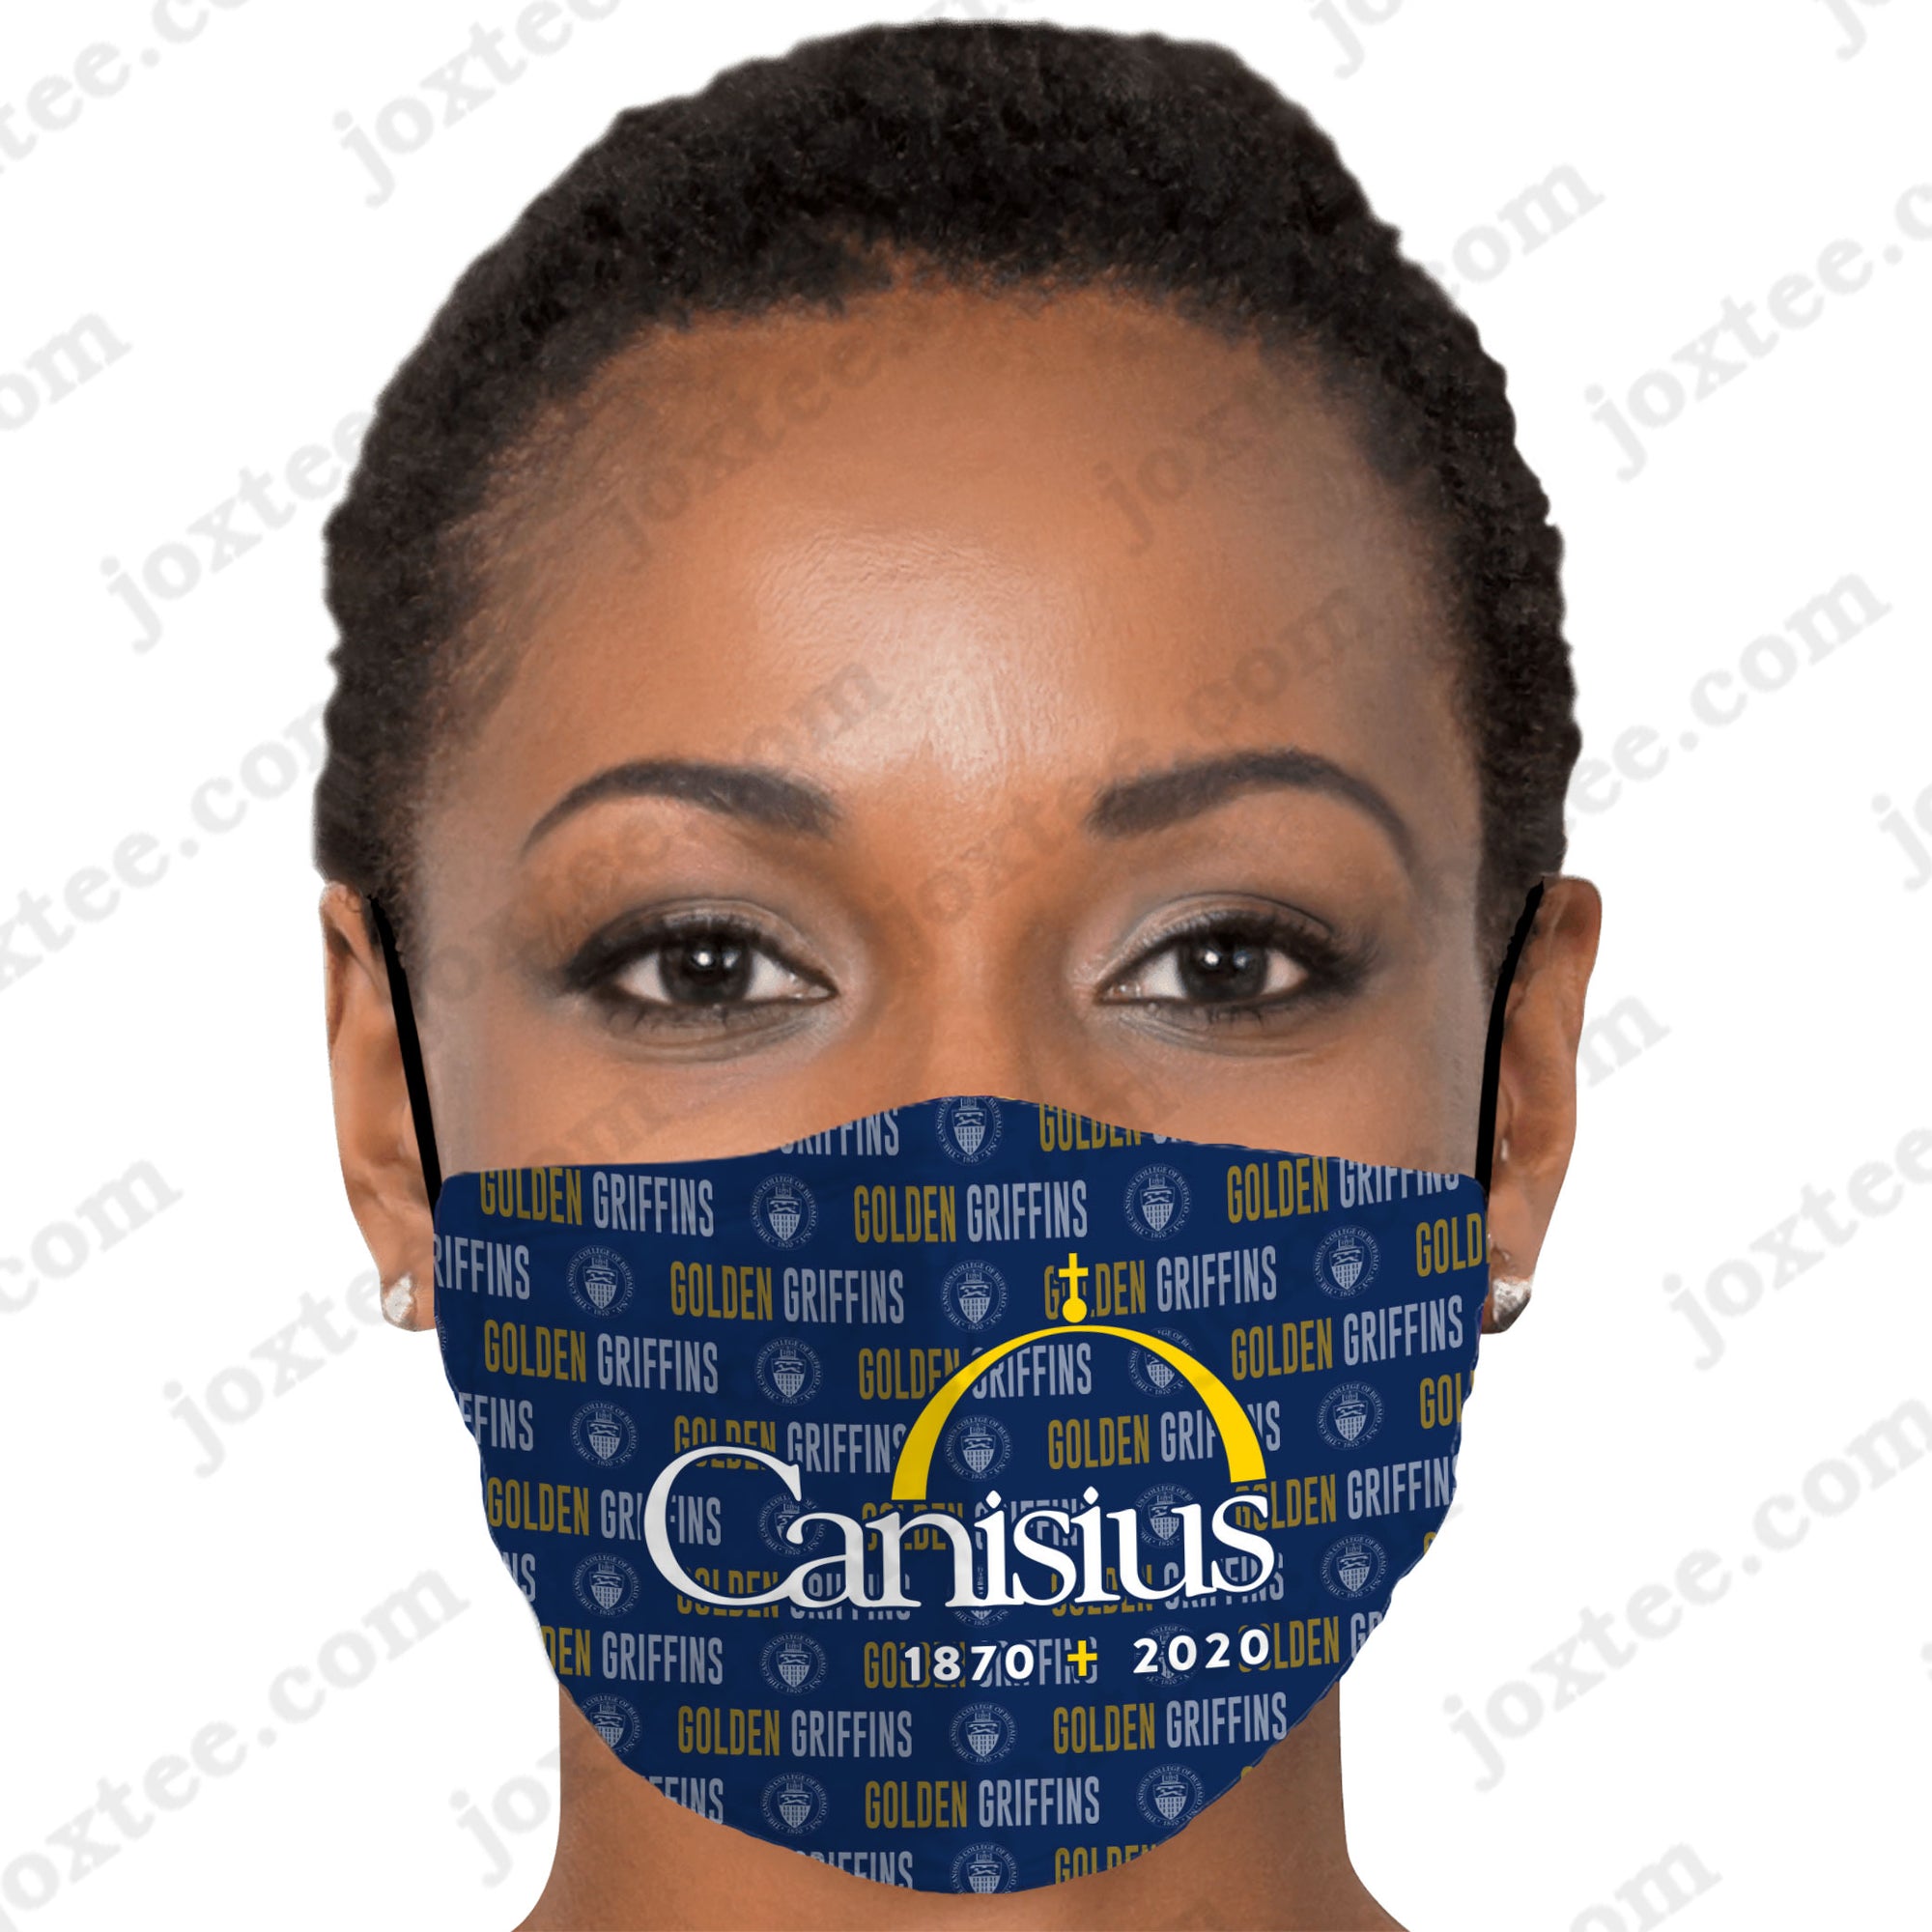 Canisius Fashion Mask 3D v17